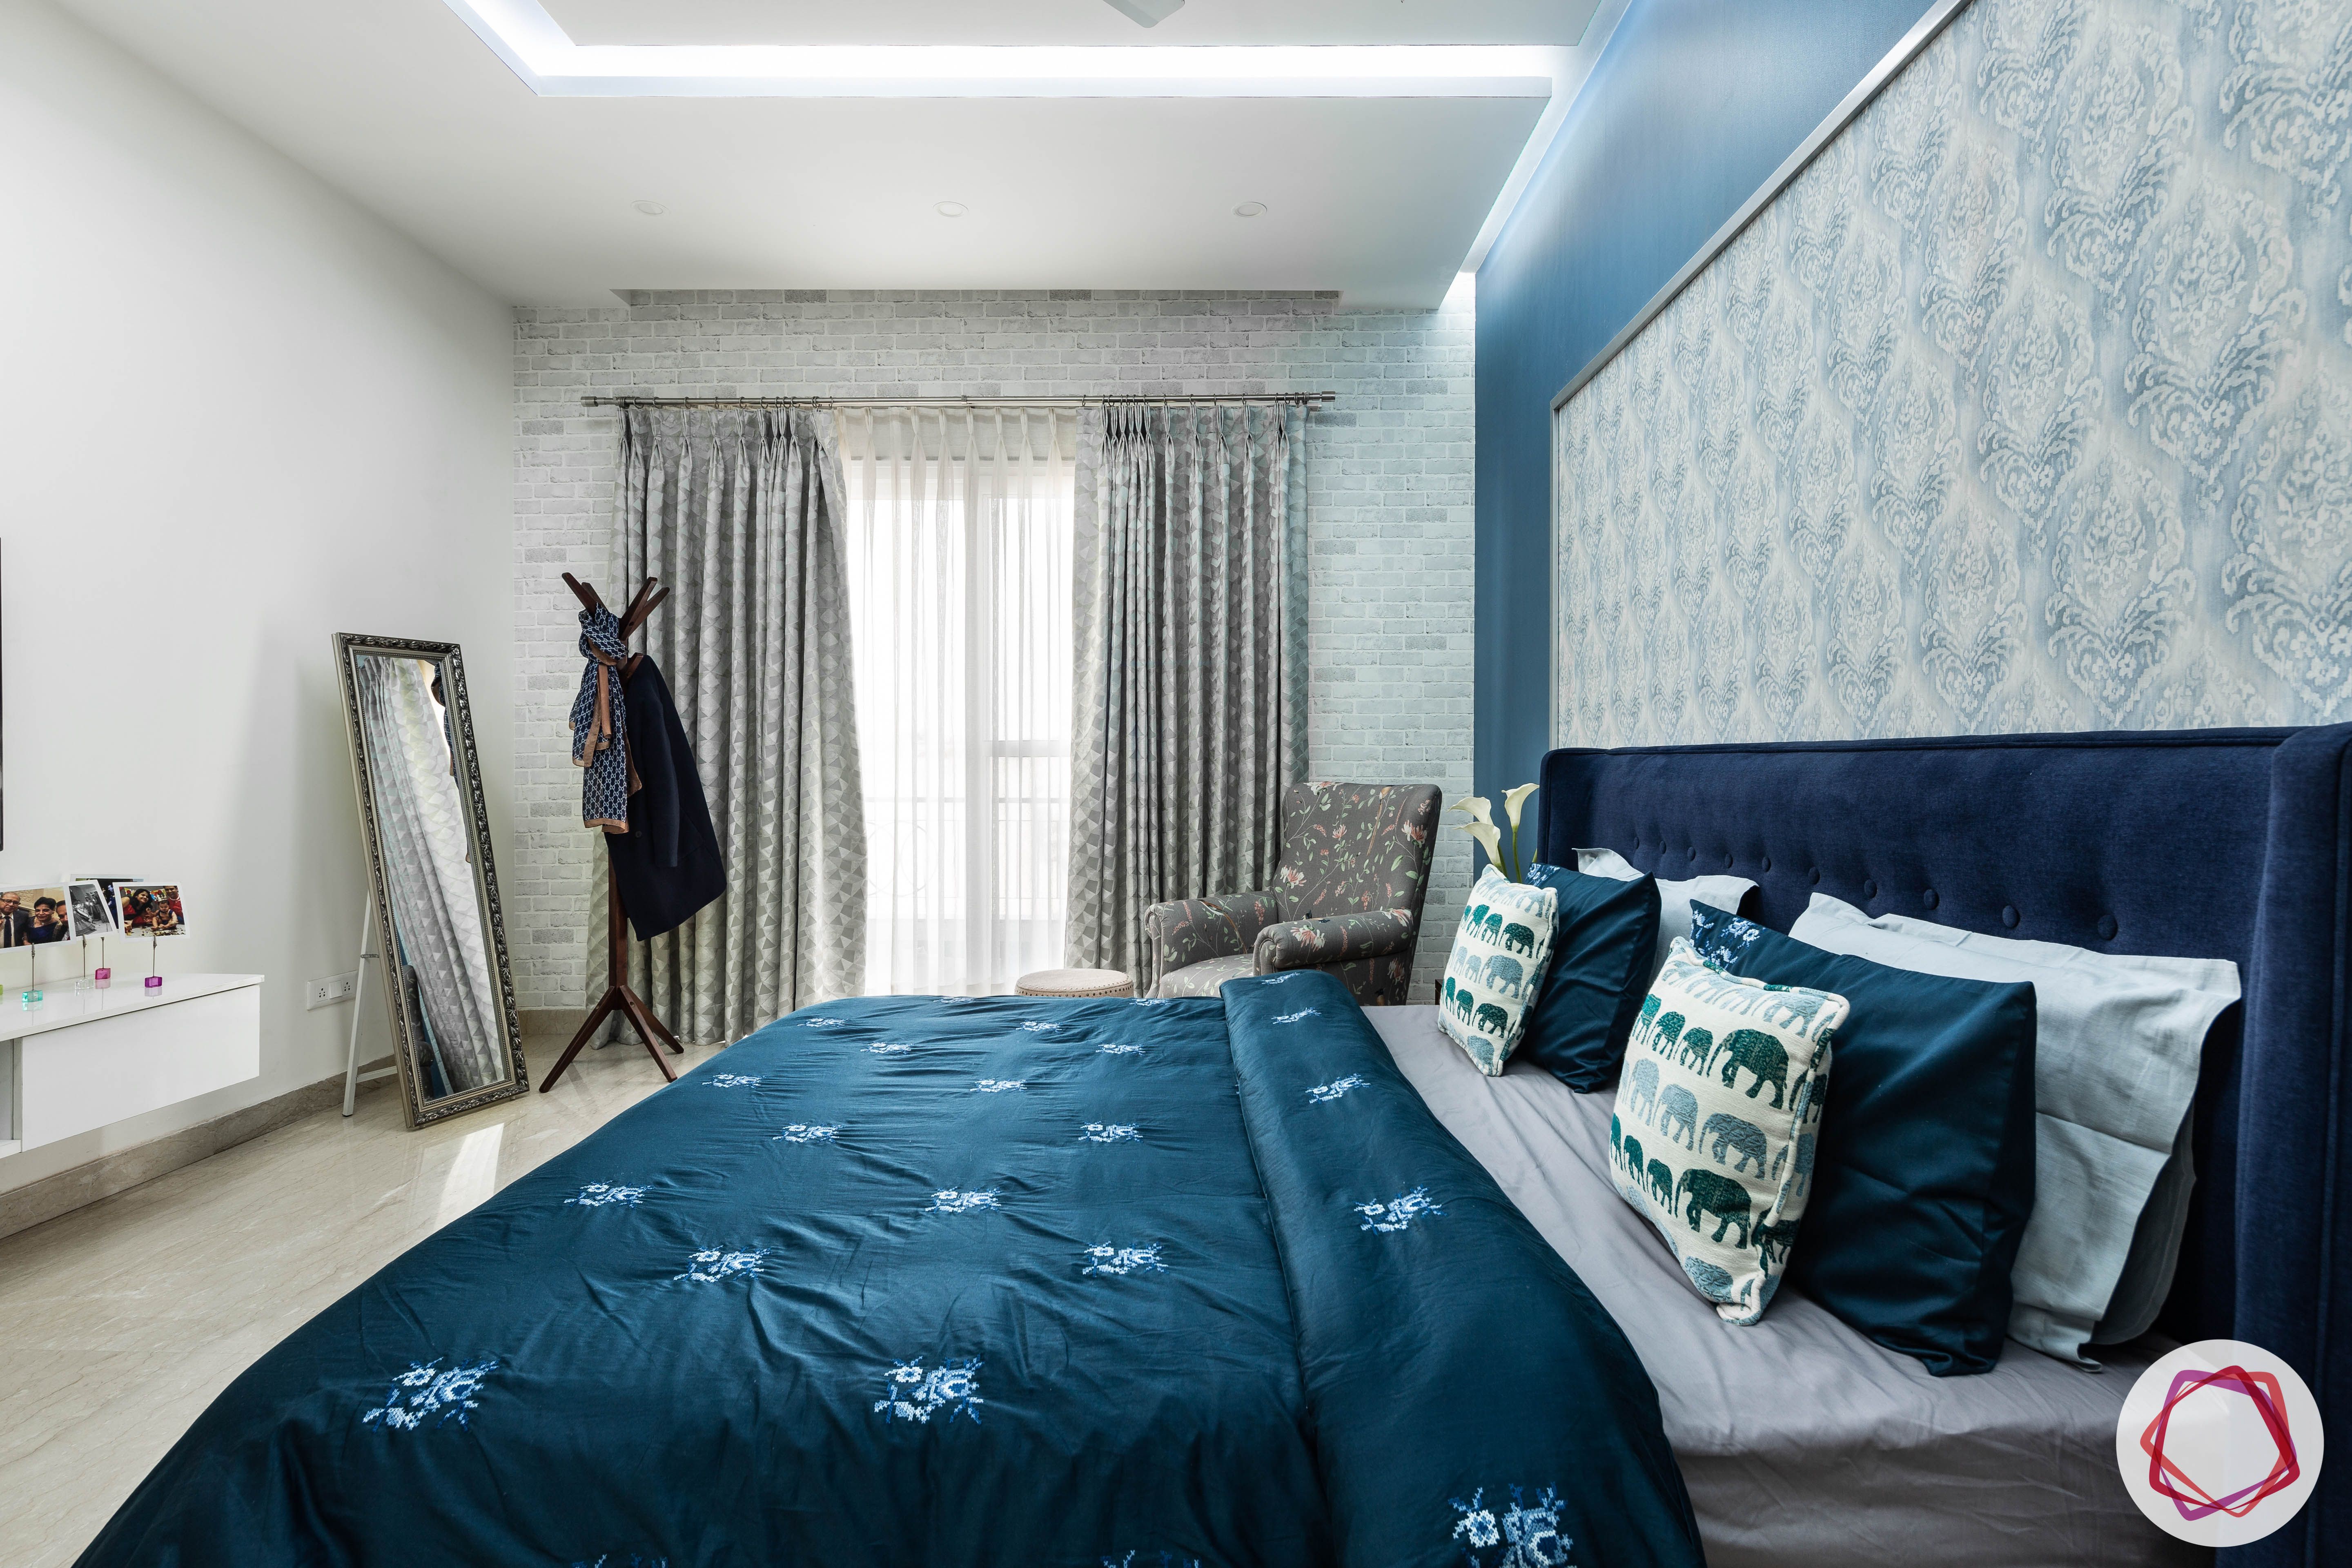 blue-bedroom-3D-brick-tiles-wallpaper-headboard